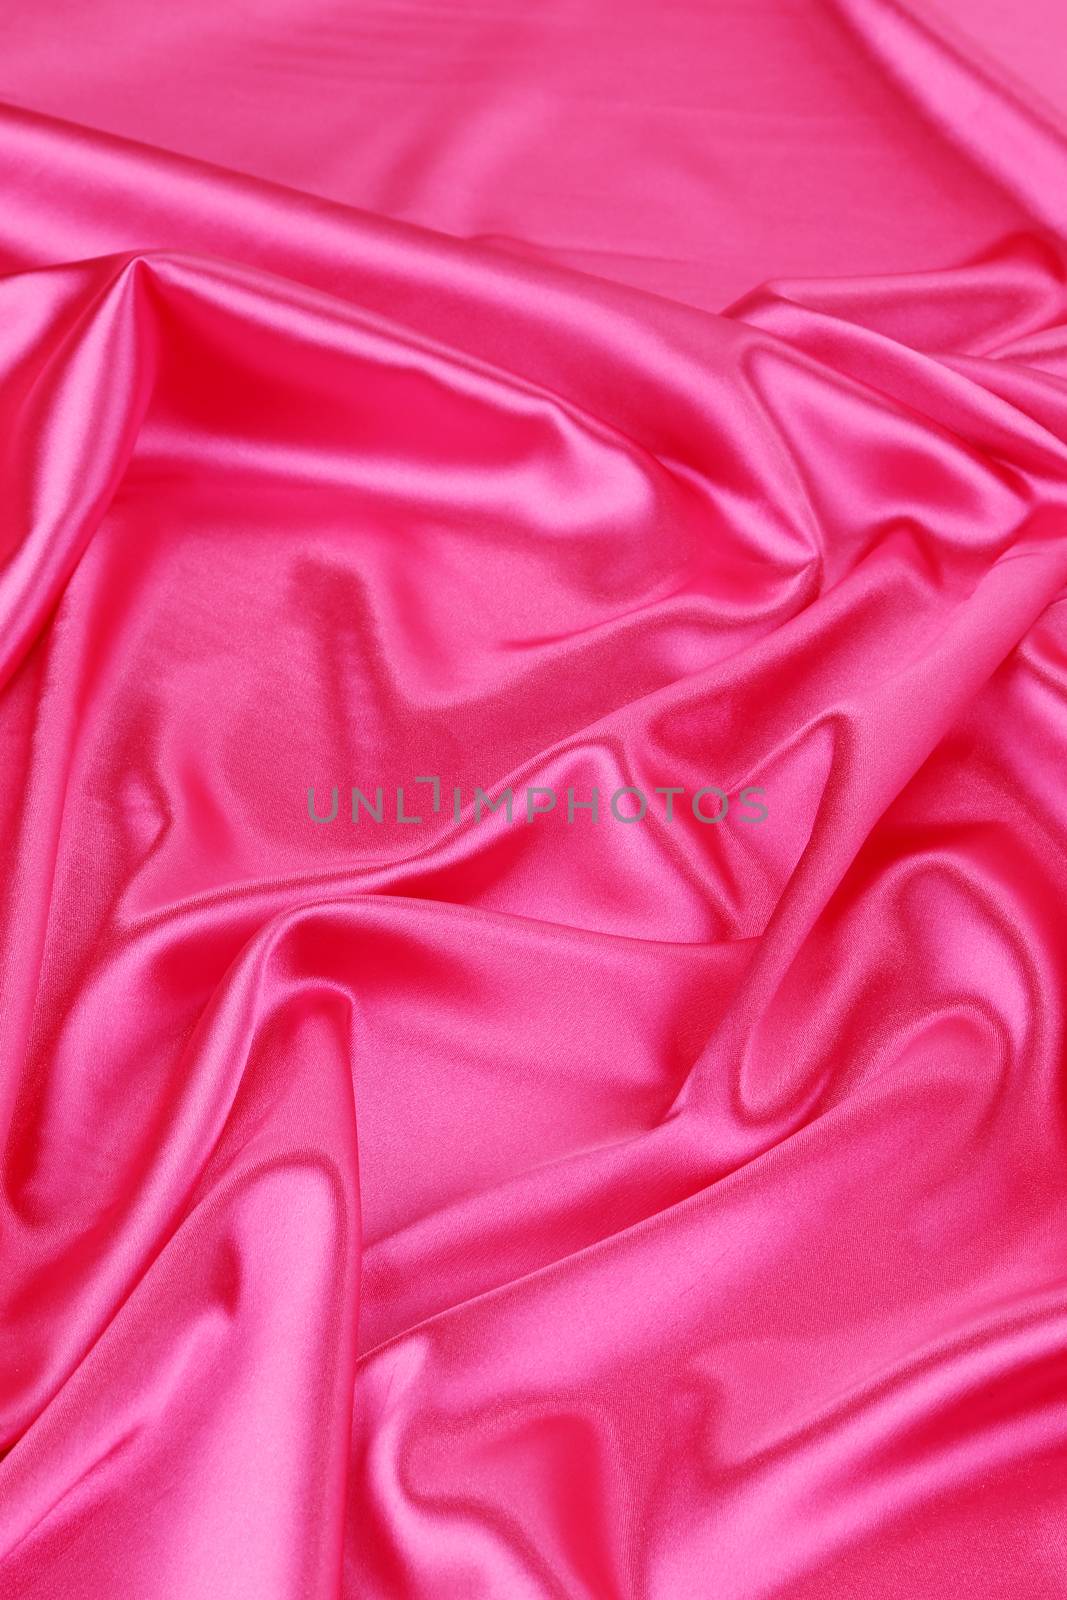 Pink silk drapery. Close up. Whole background.